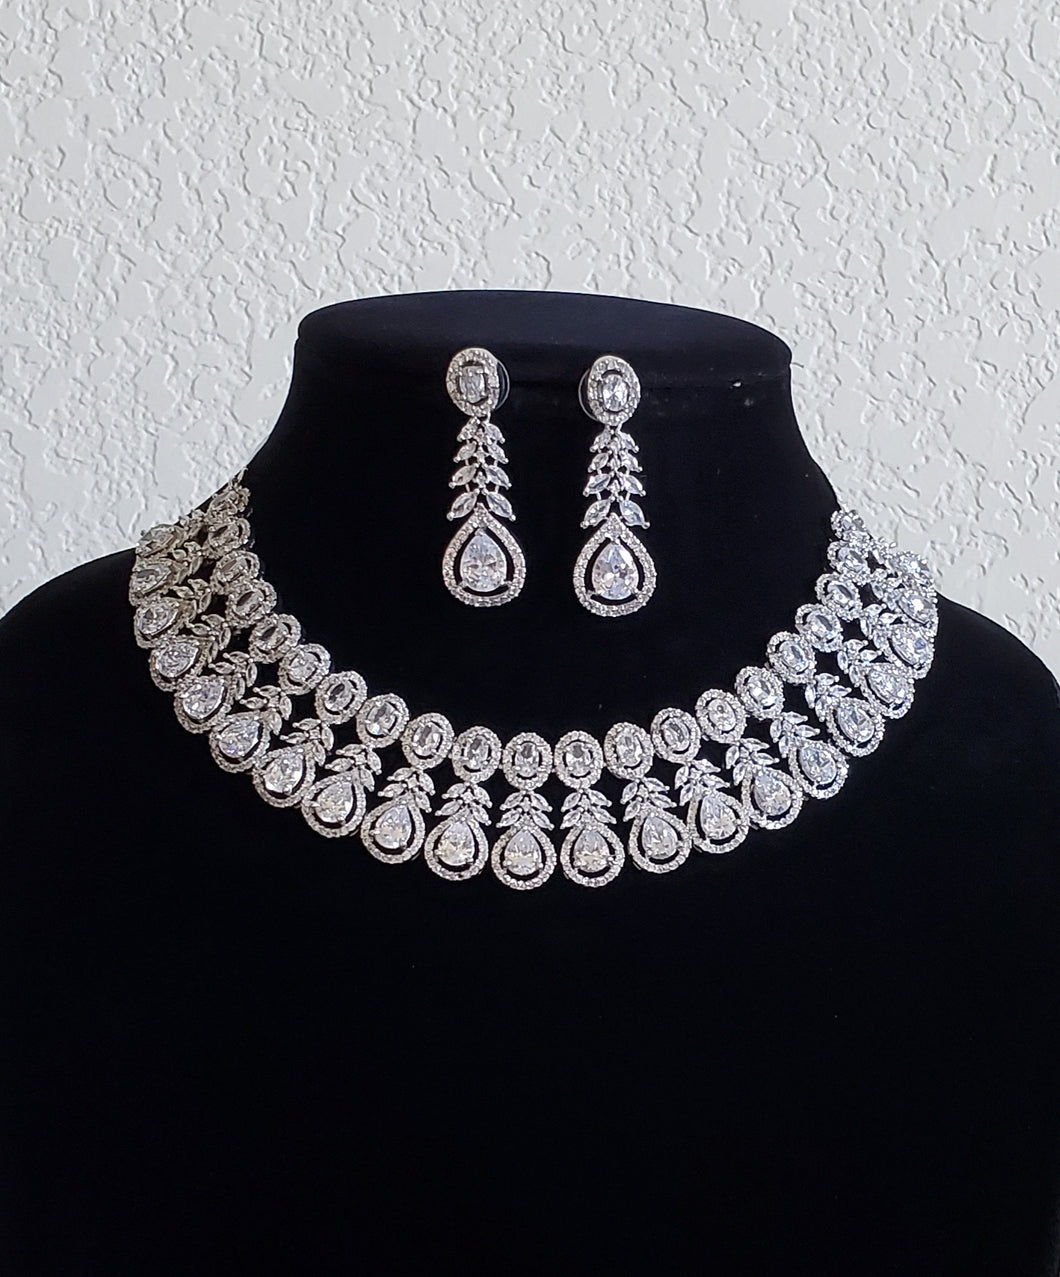 American Diamond Necklace With White Polish S31 White